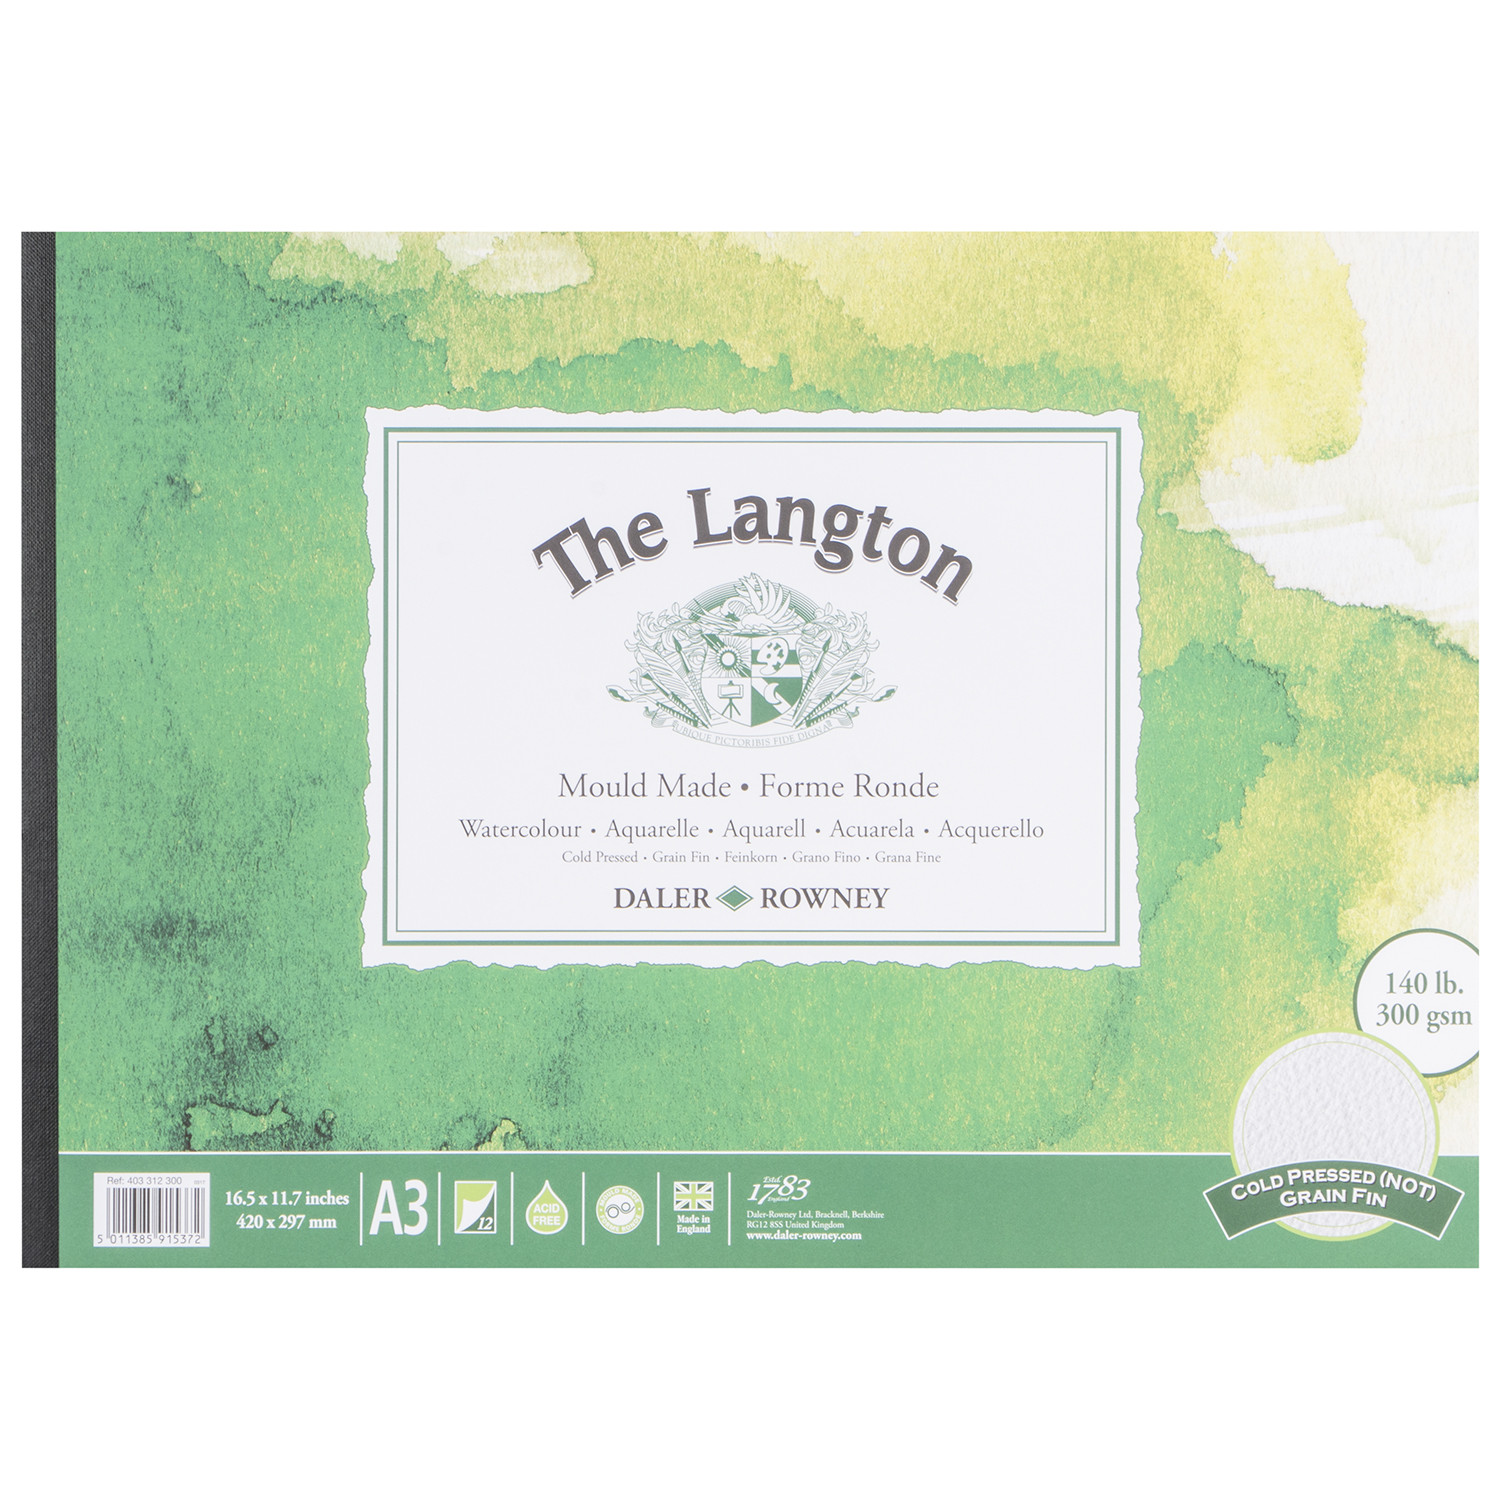 Daler-Rowney The Langton Watercolour Pad - A3 Image